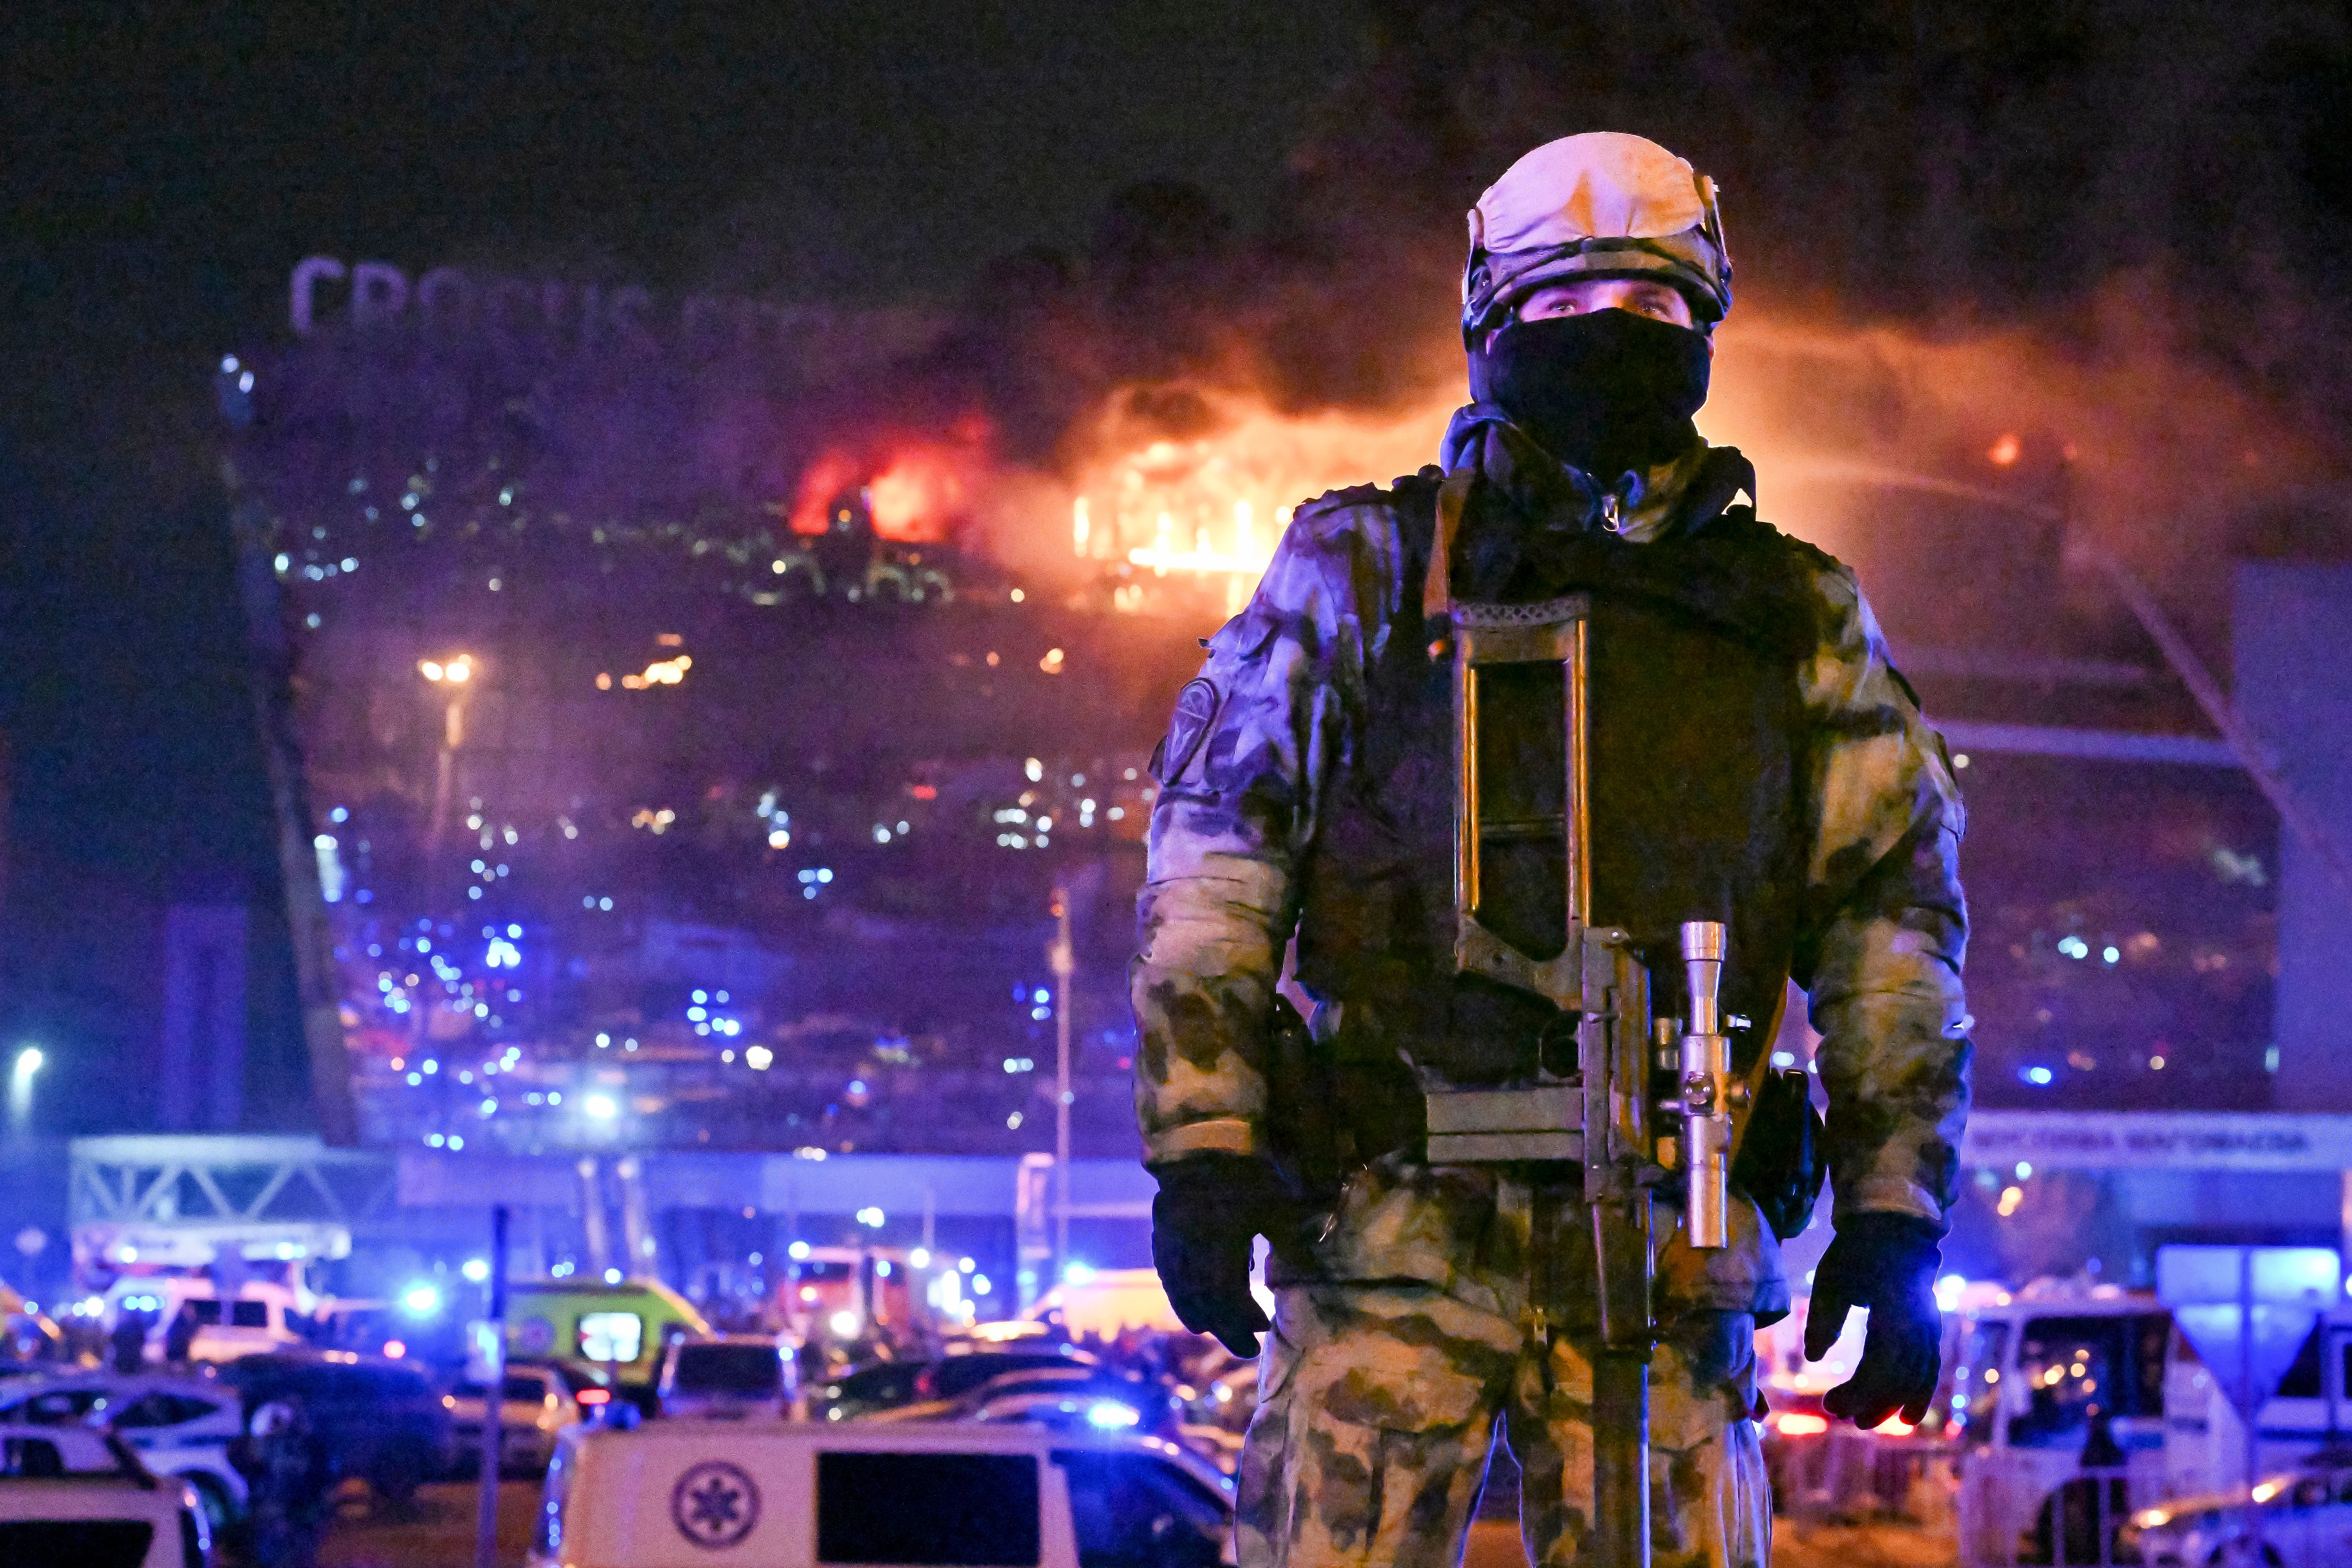 A Russian Rosguardia (national guard) serviceman secures an area as a massive blaze seen over Crocus City Hall